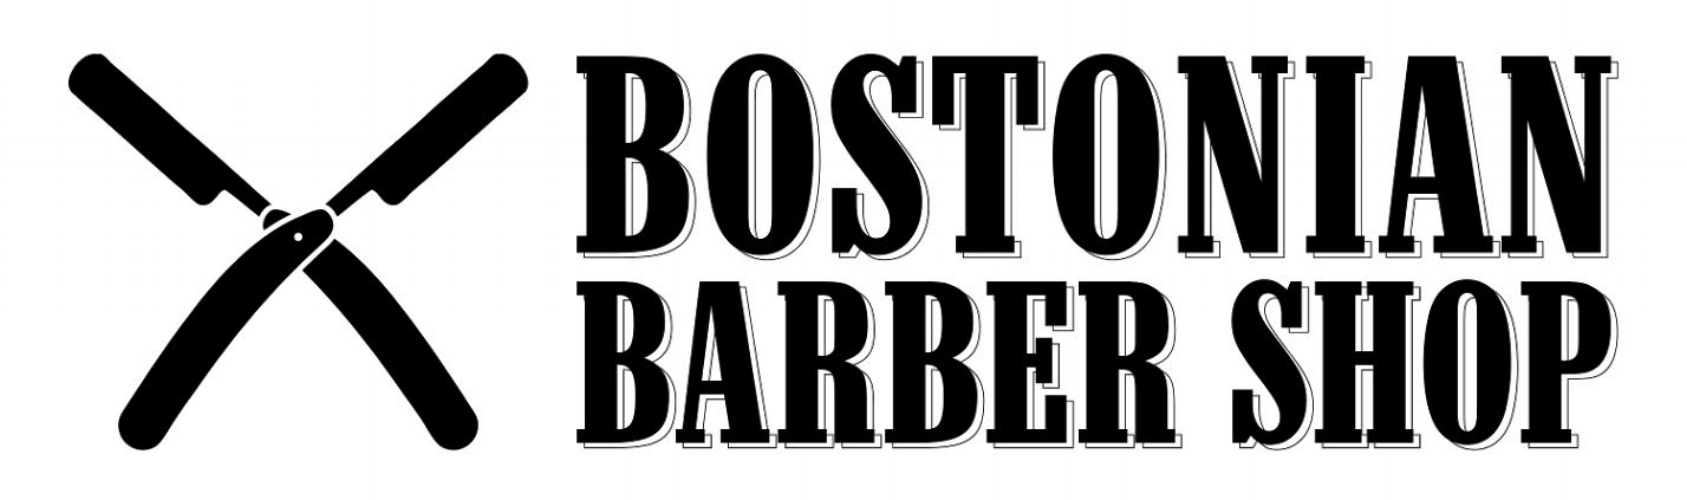 BOSTONS BEST BARBERSHOP - 968 THE SHOP - Somerville, MA